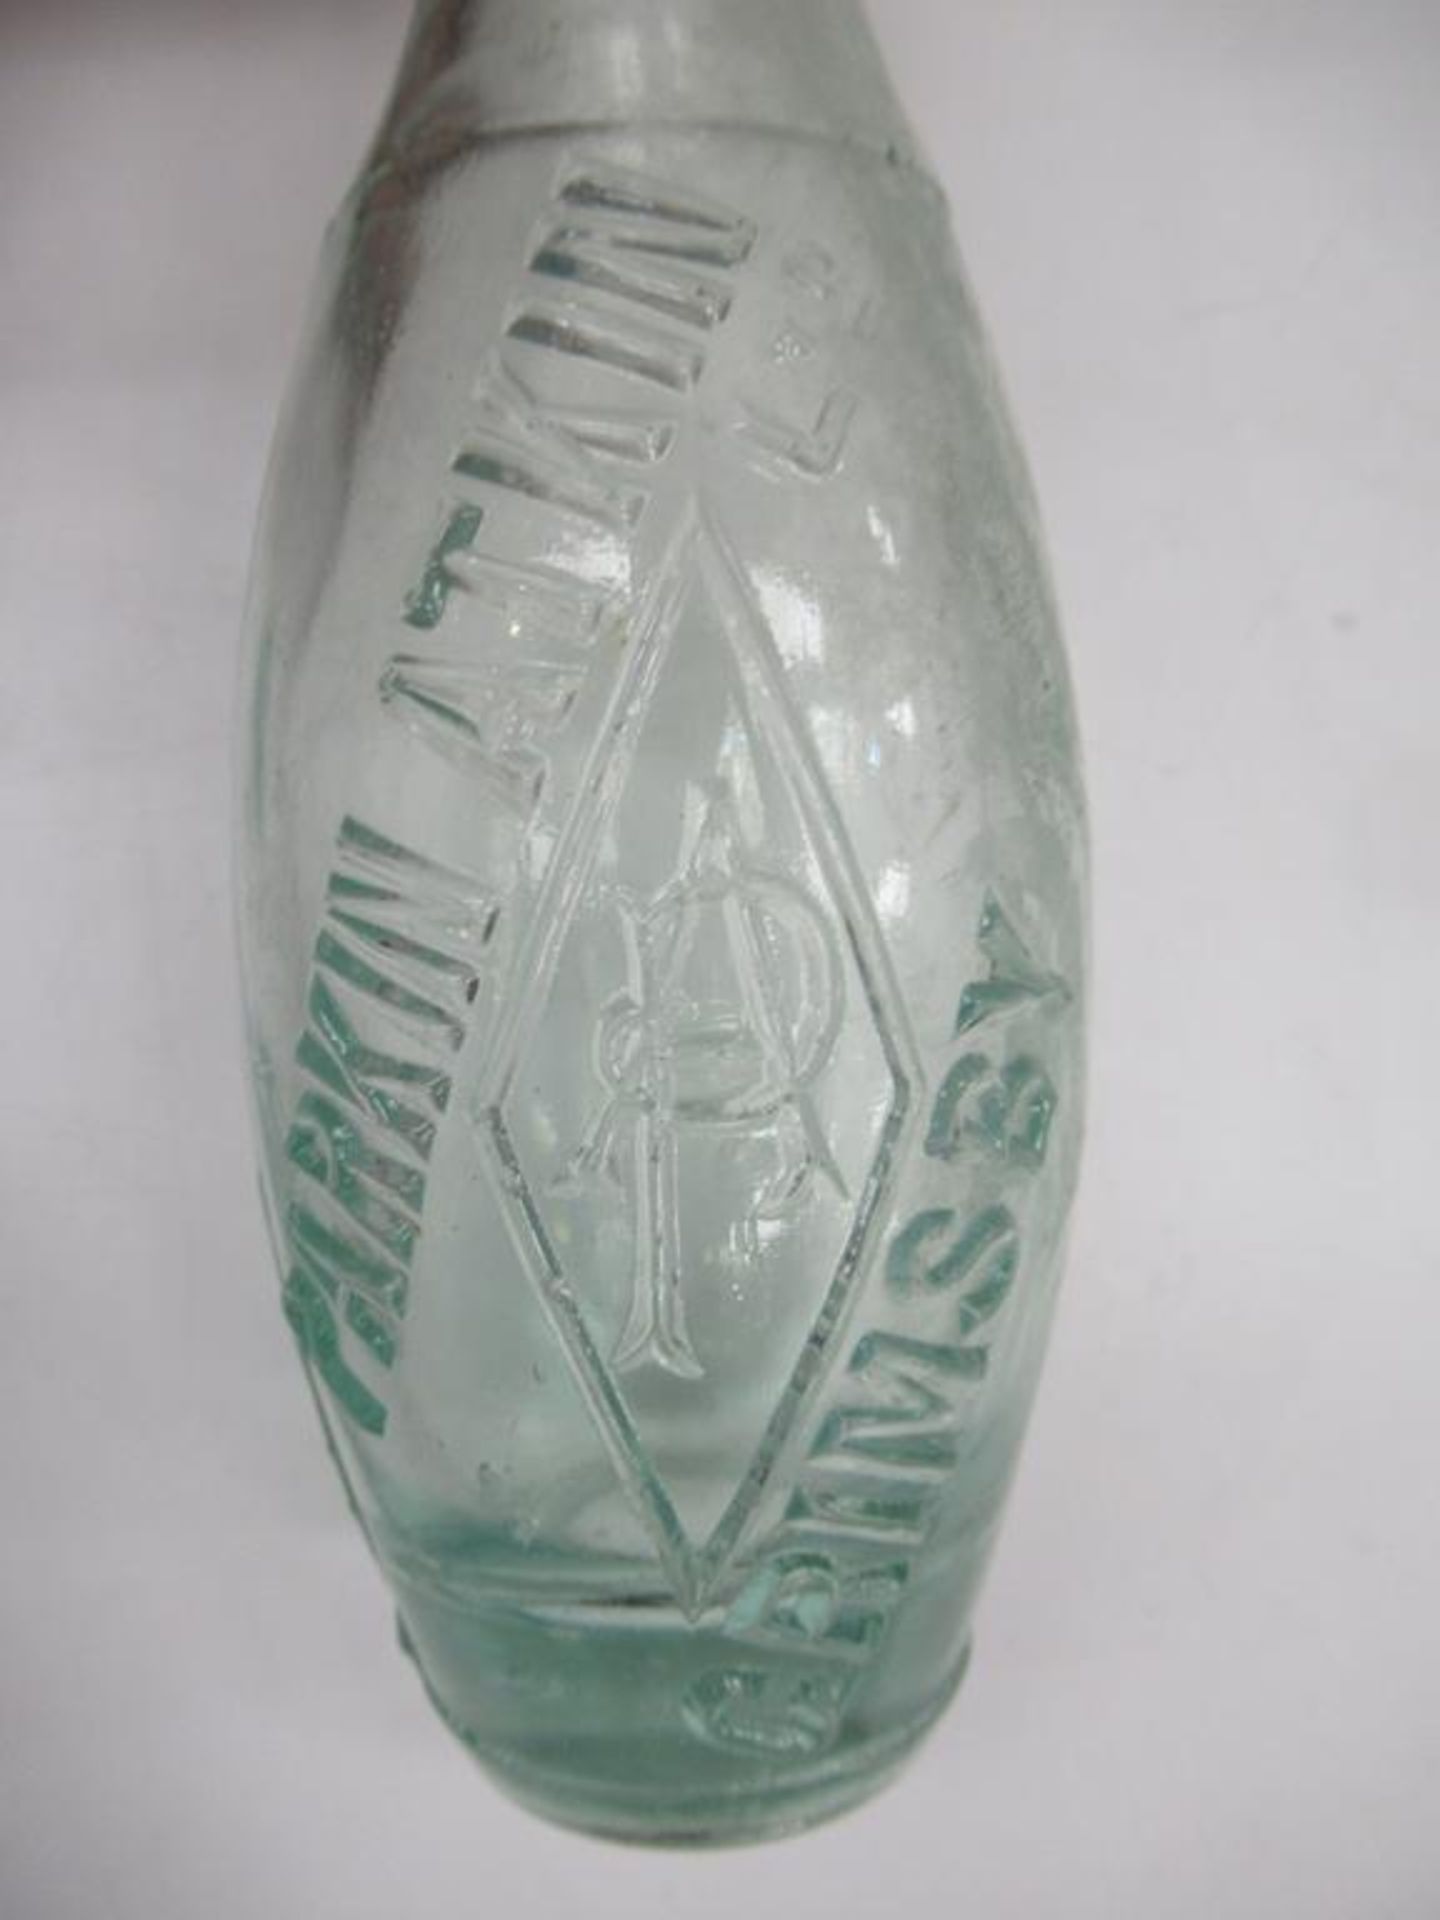 Grimsby Parkin Atkin Ltd small bulbous bottle - Image 6 of 6